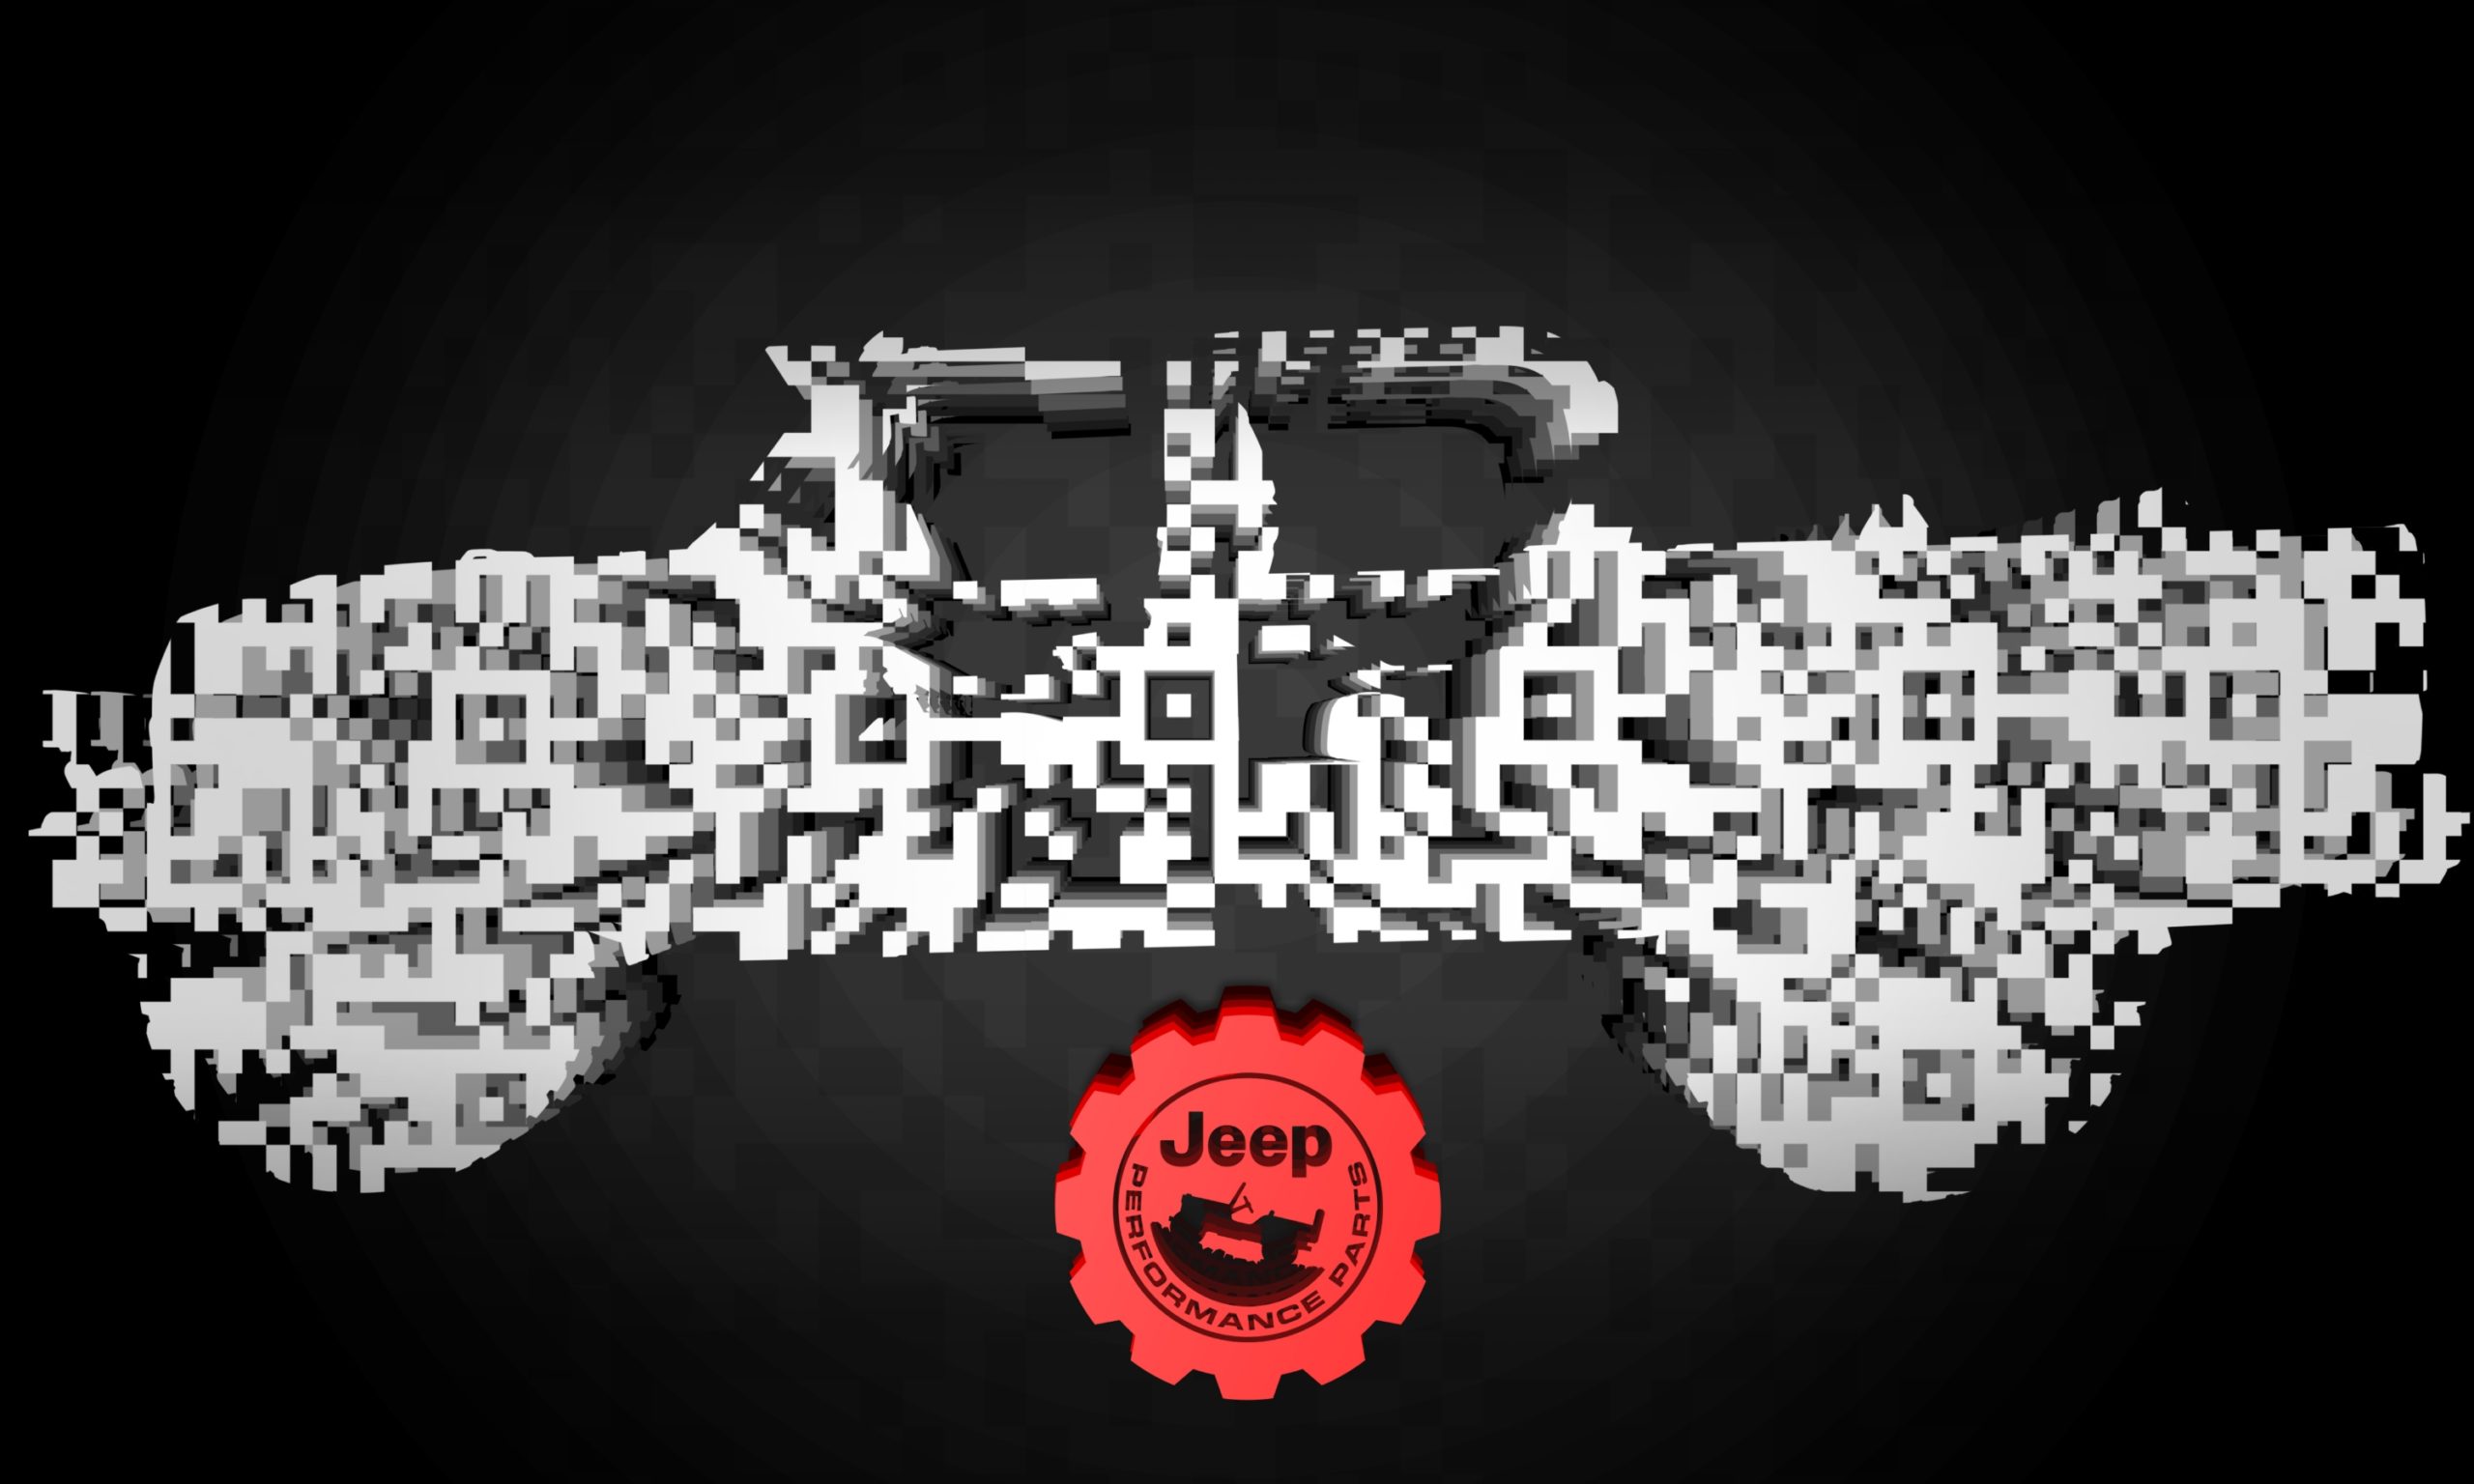 Jeep concept image